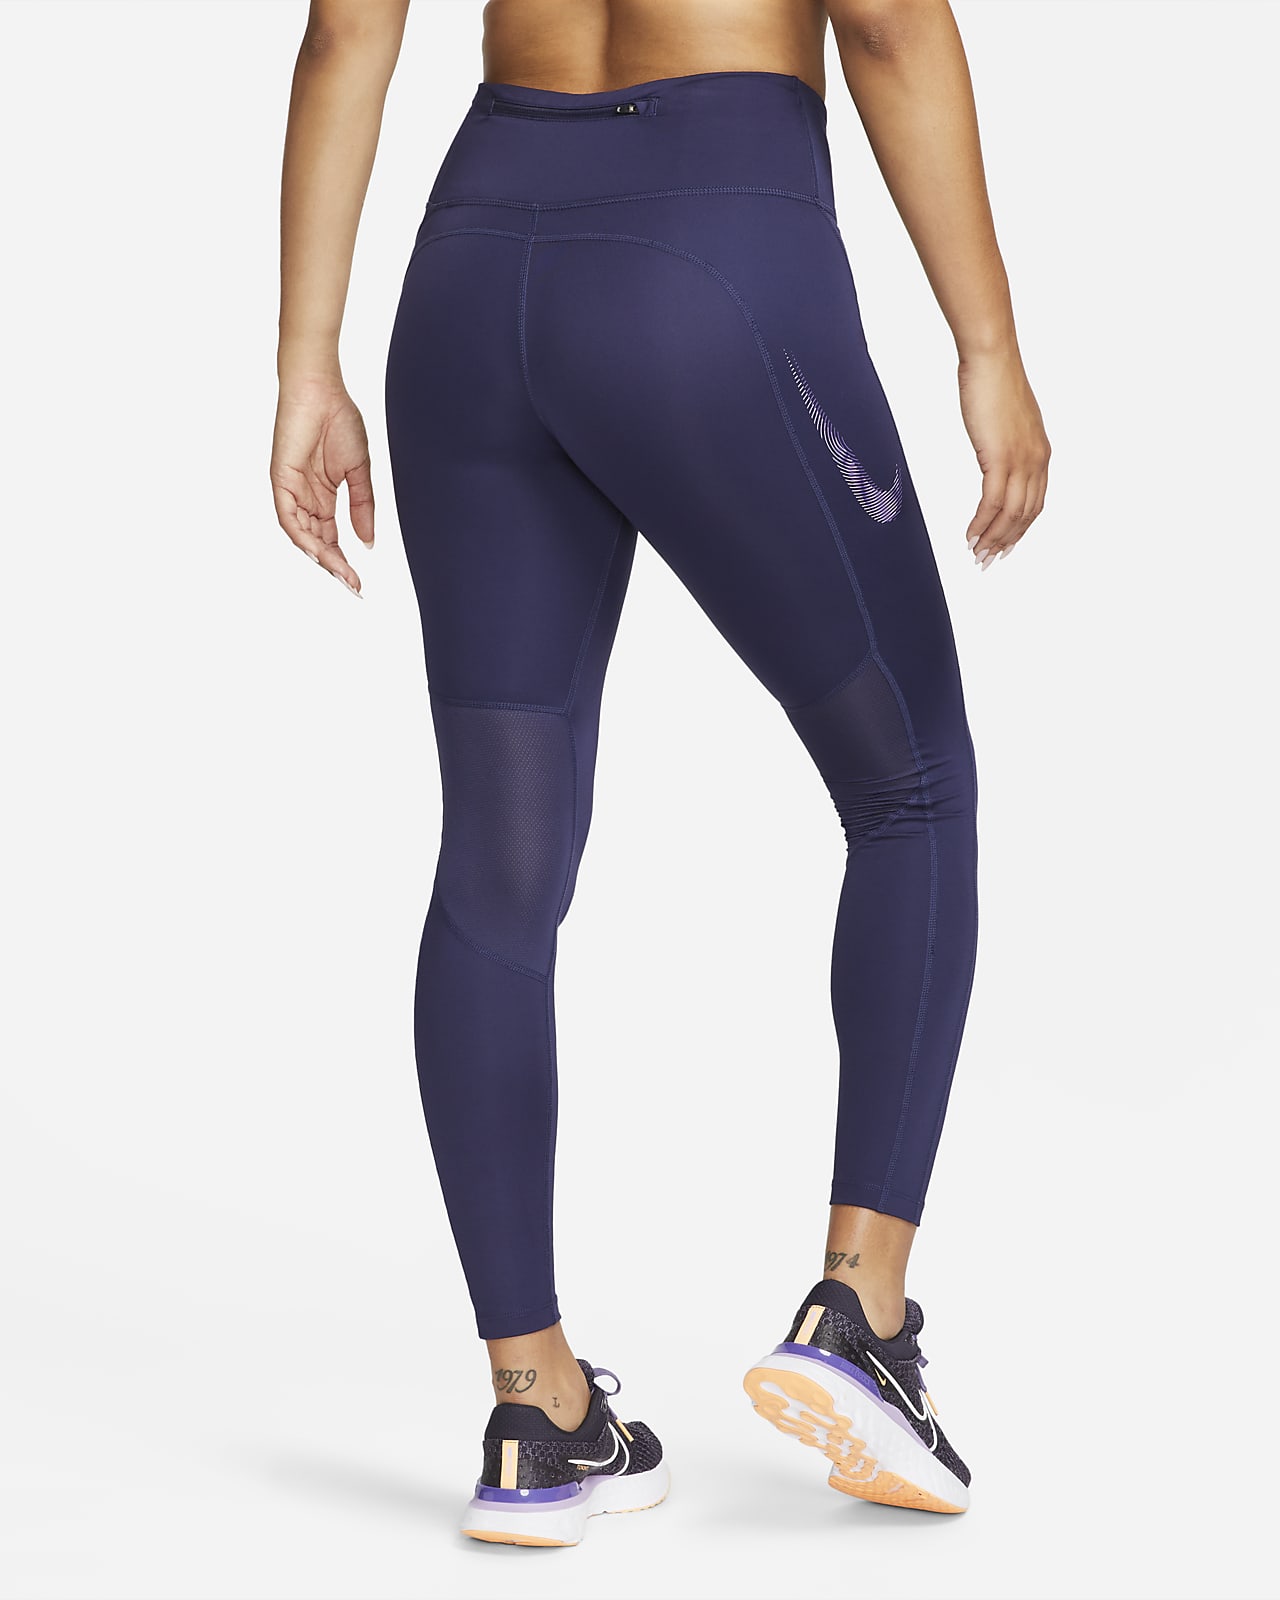 Women's Reflective Tights & Leggings. Nike FI